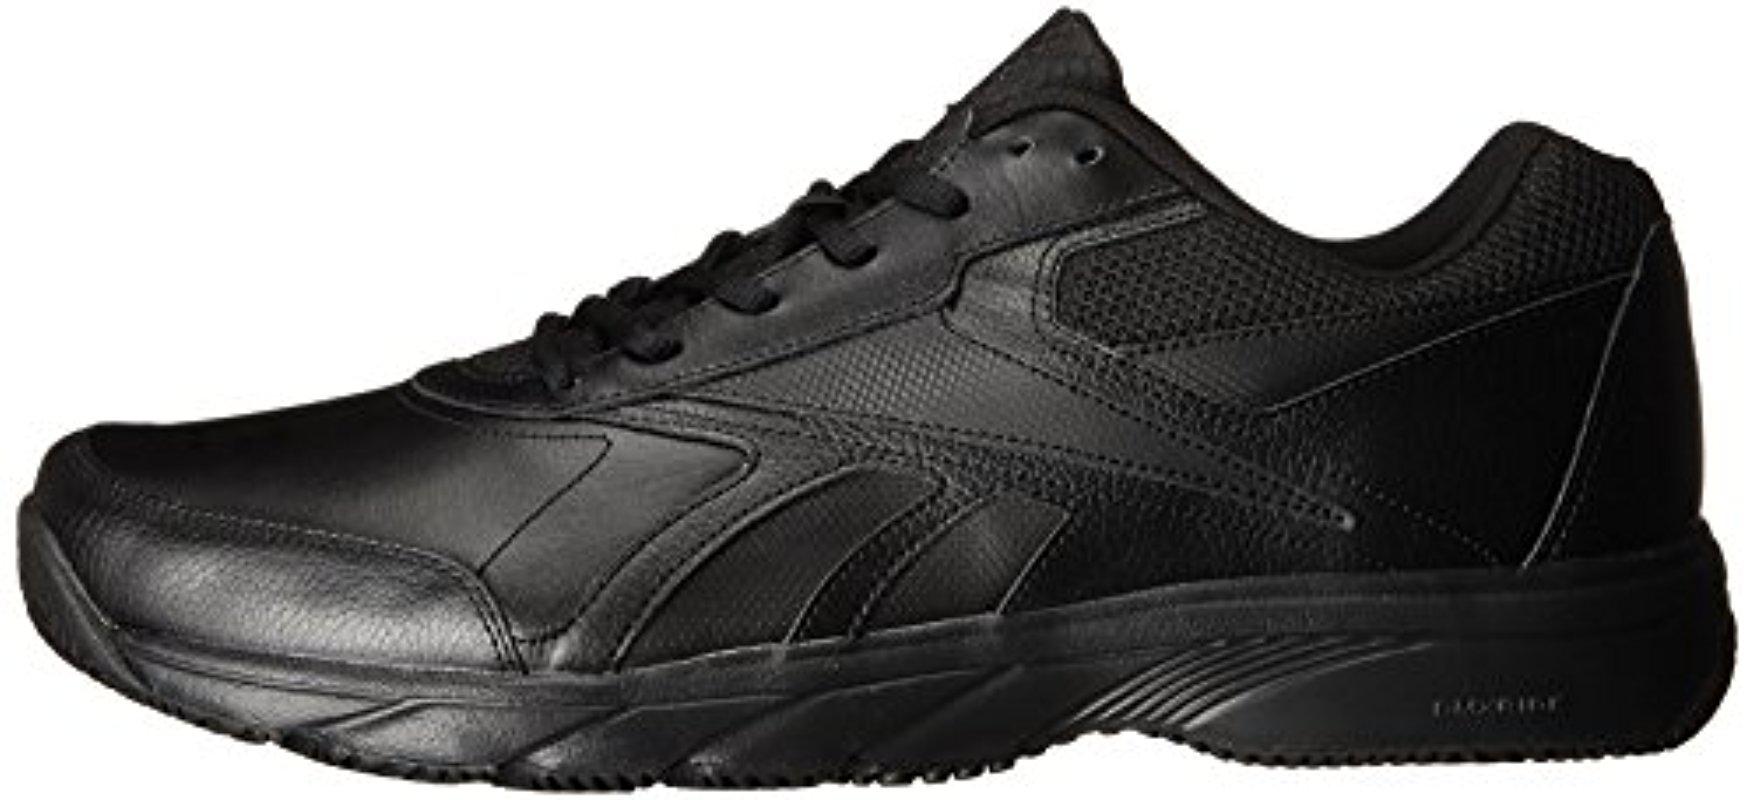 Reebok Leather Work N Cushion 2.0 Walking Shoe in Black/Black (Black) for  Men - Lyst